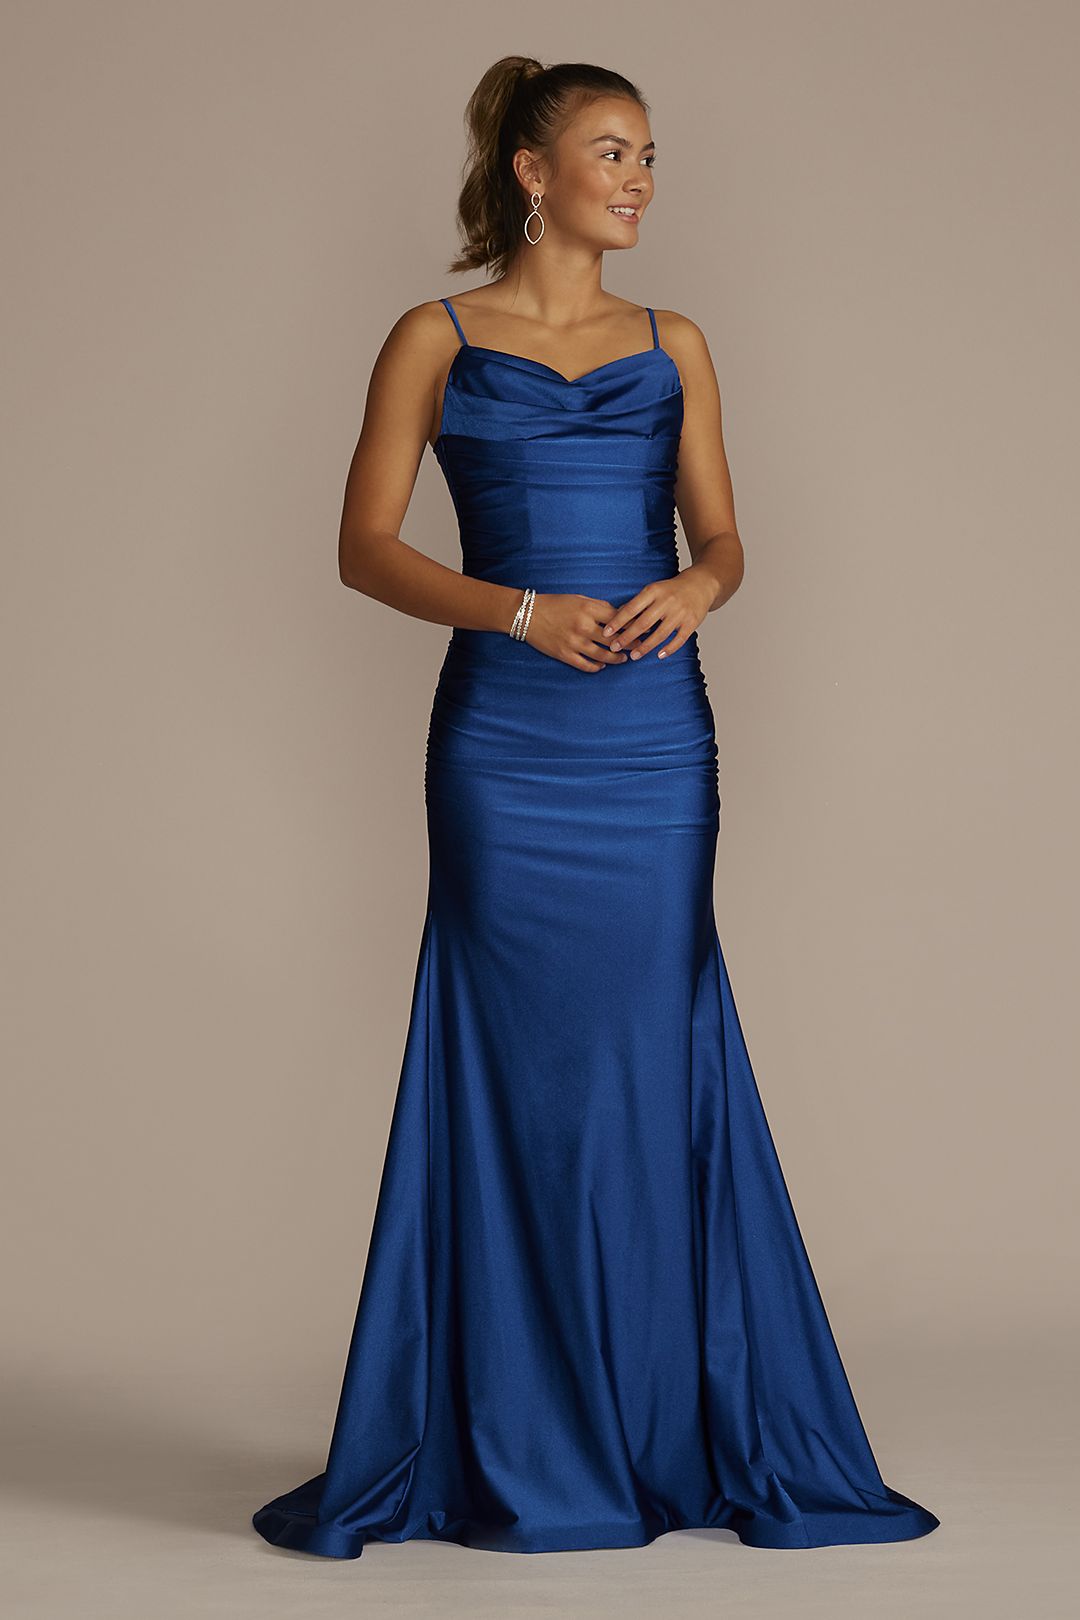 Girl in navy blue prom dress